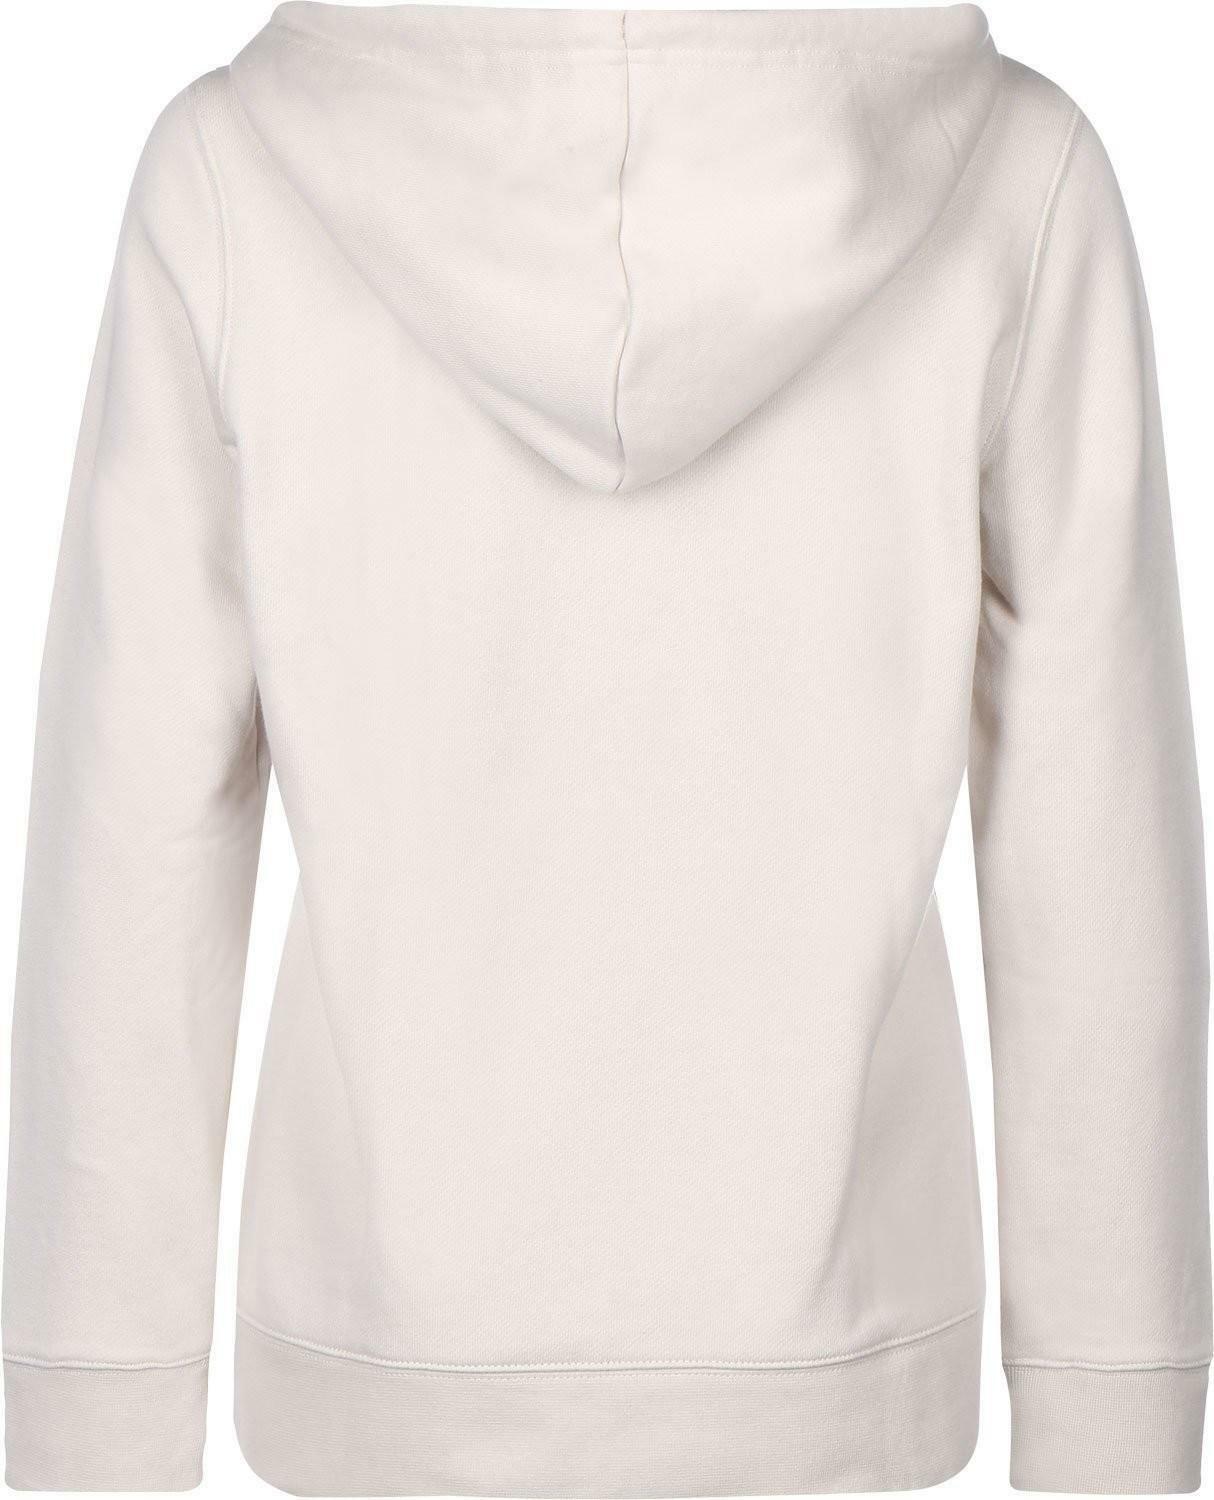 adidas adidas trefoil hoodie felpa donna bianco sporco ce2414